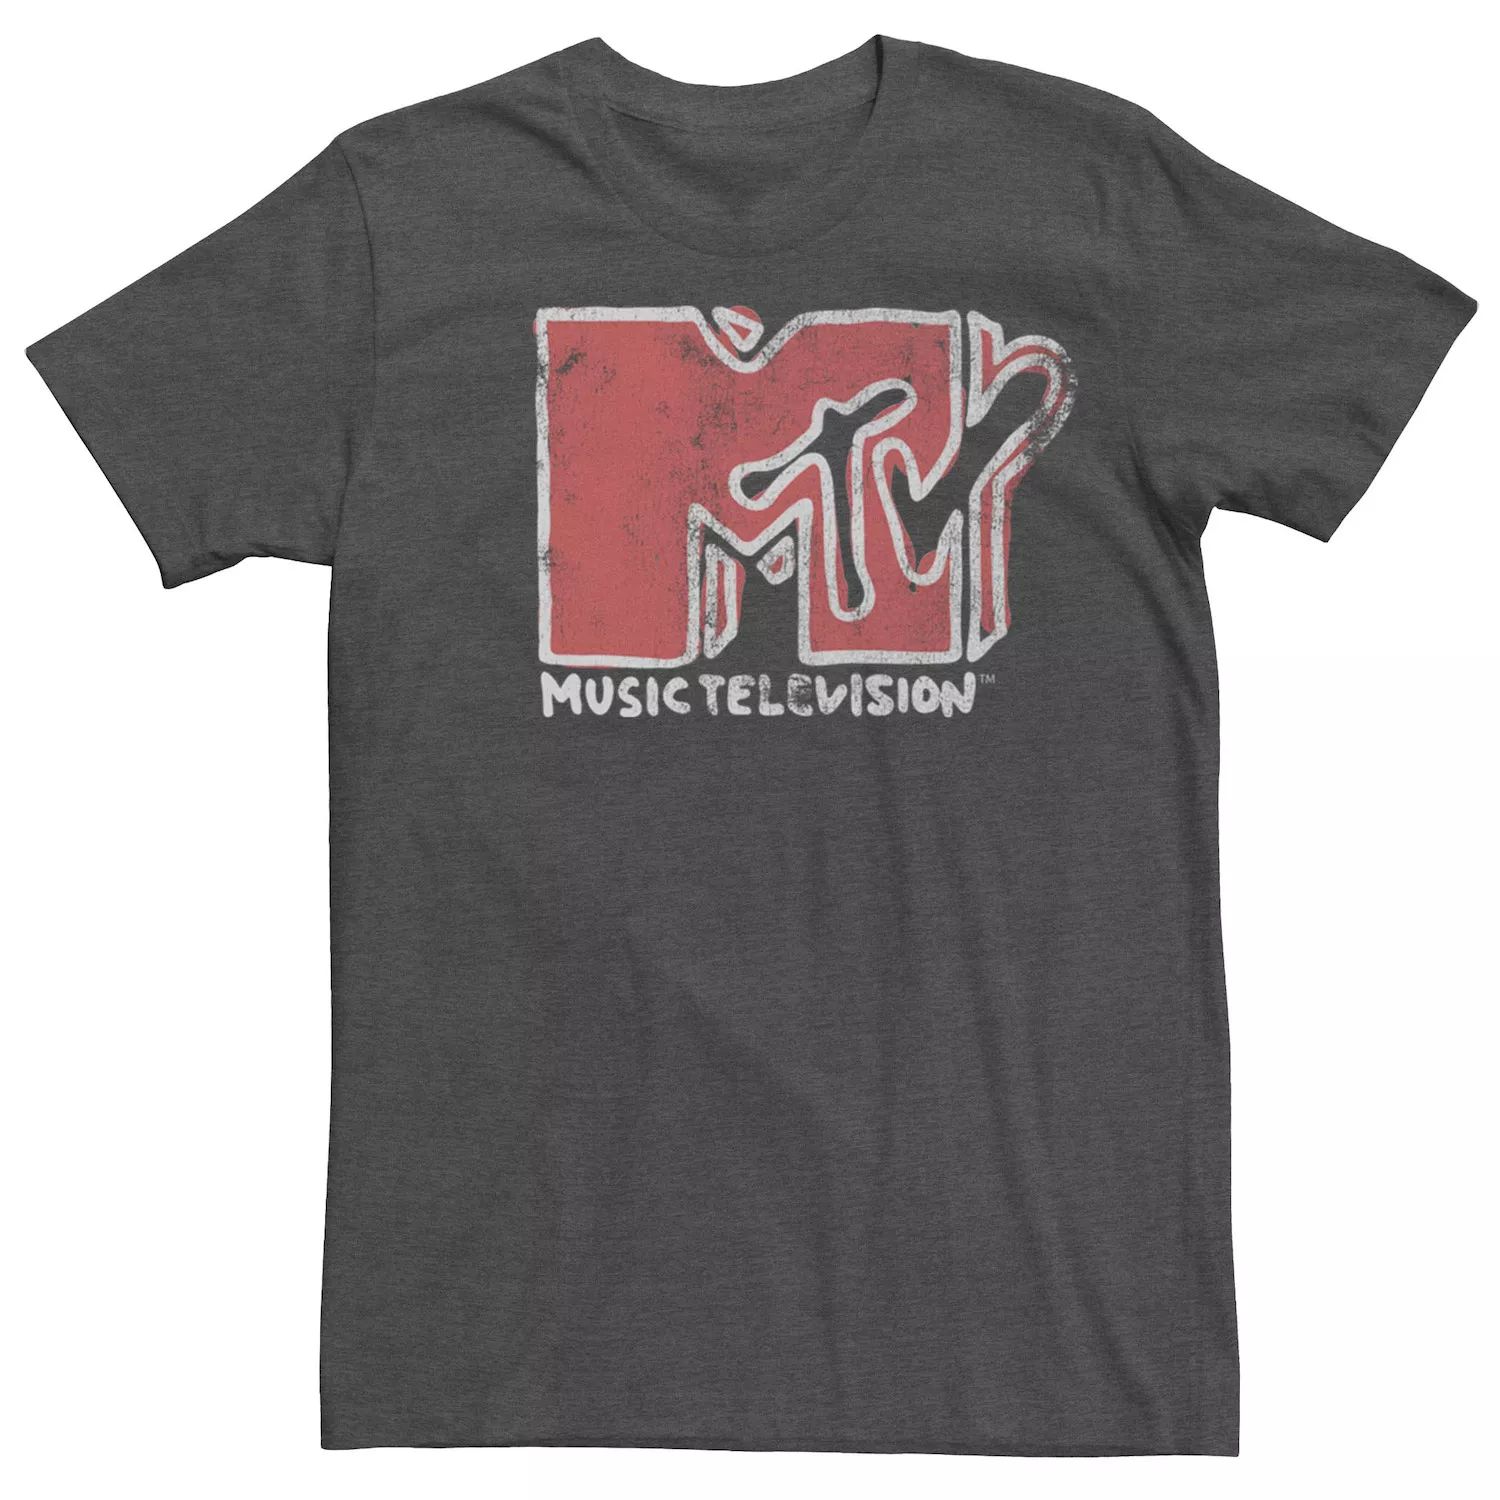 Мужская футболка с короткими рукавами и логотипом MTV Vintage Sketch Licensed Character